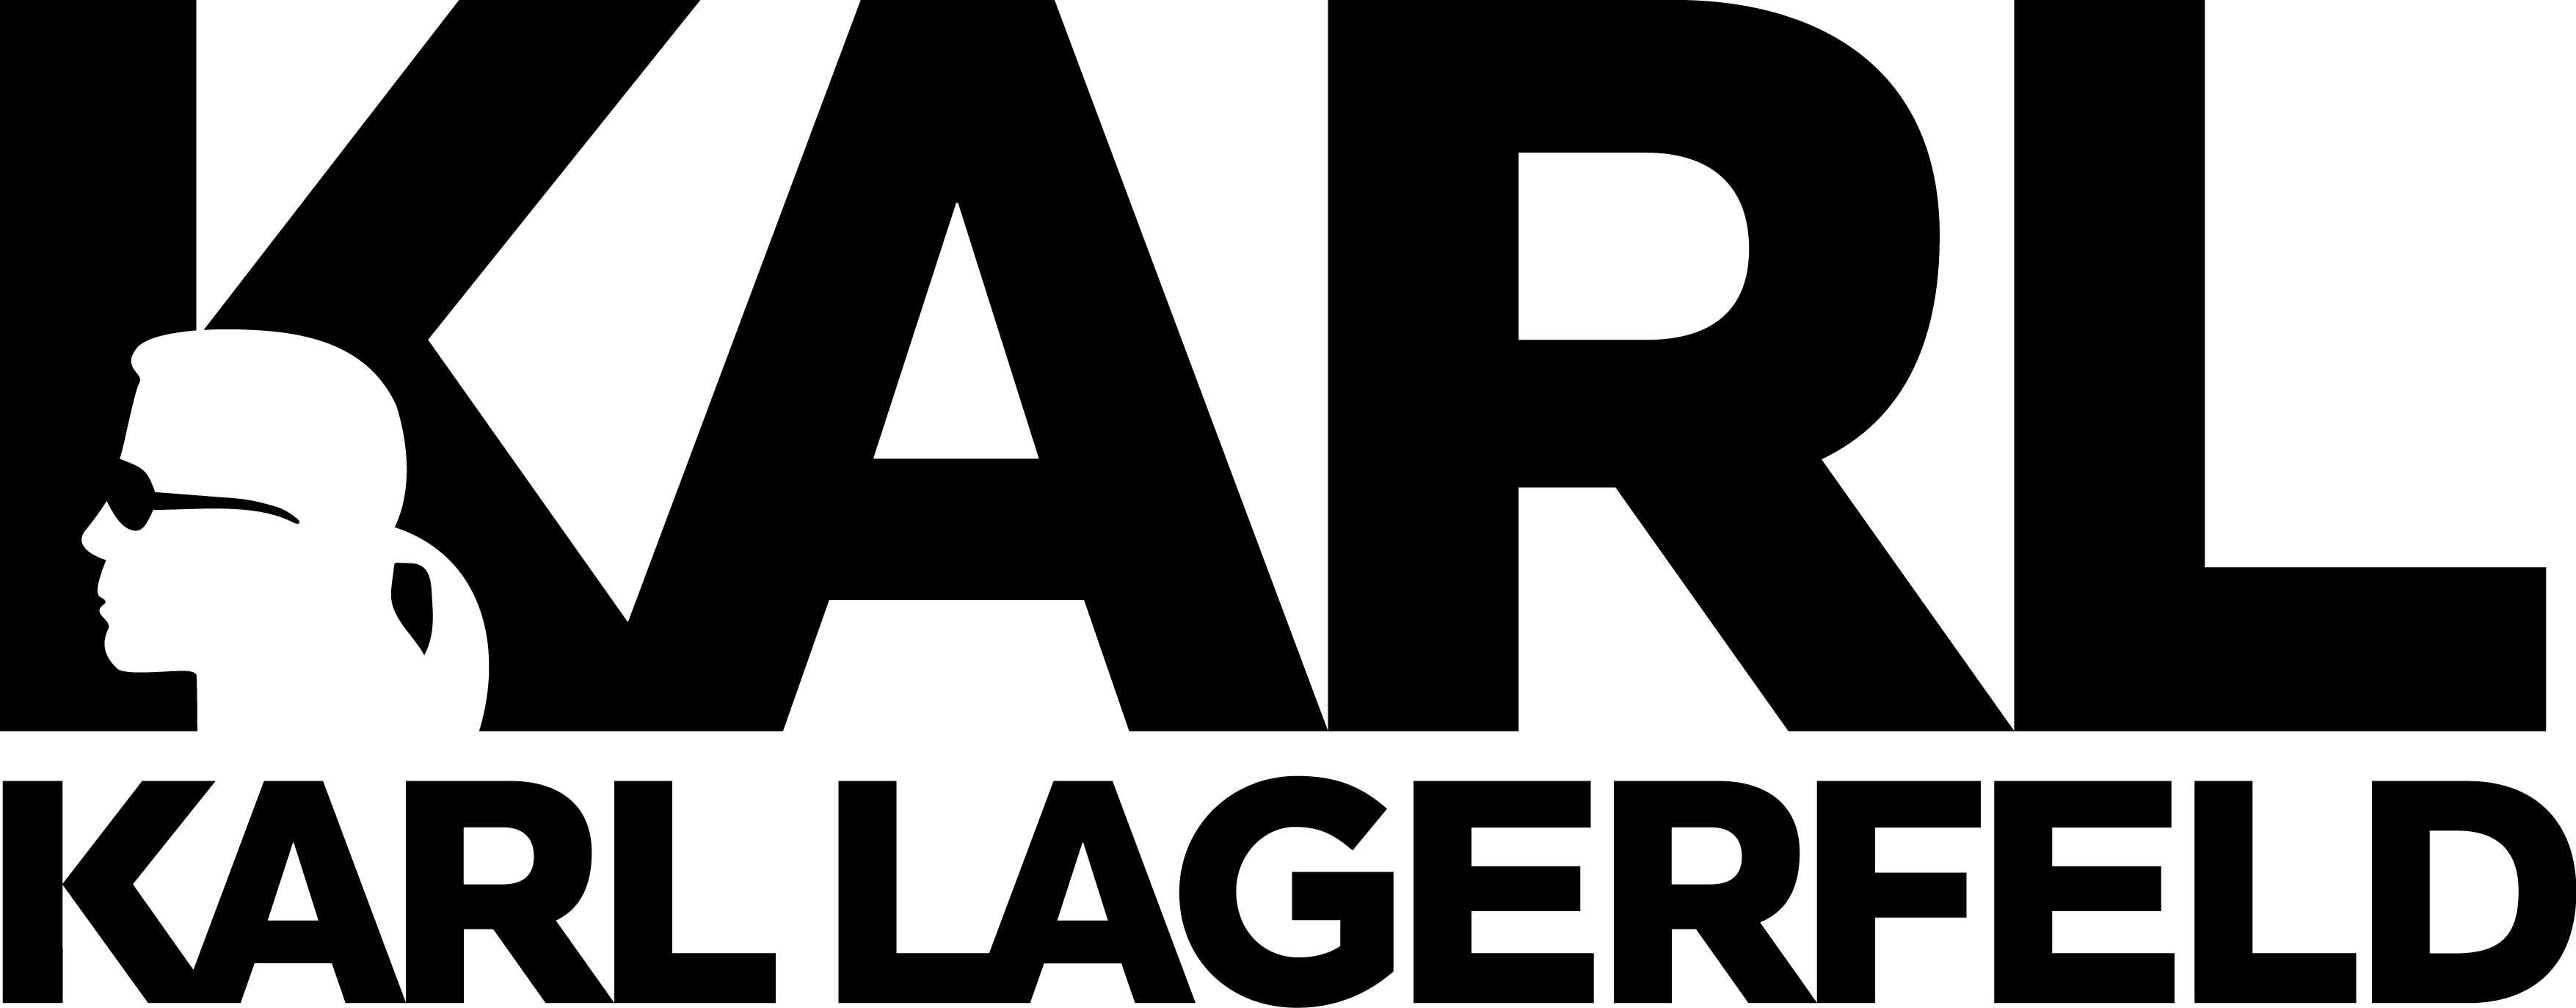 karl-lagerfeld-logo